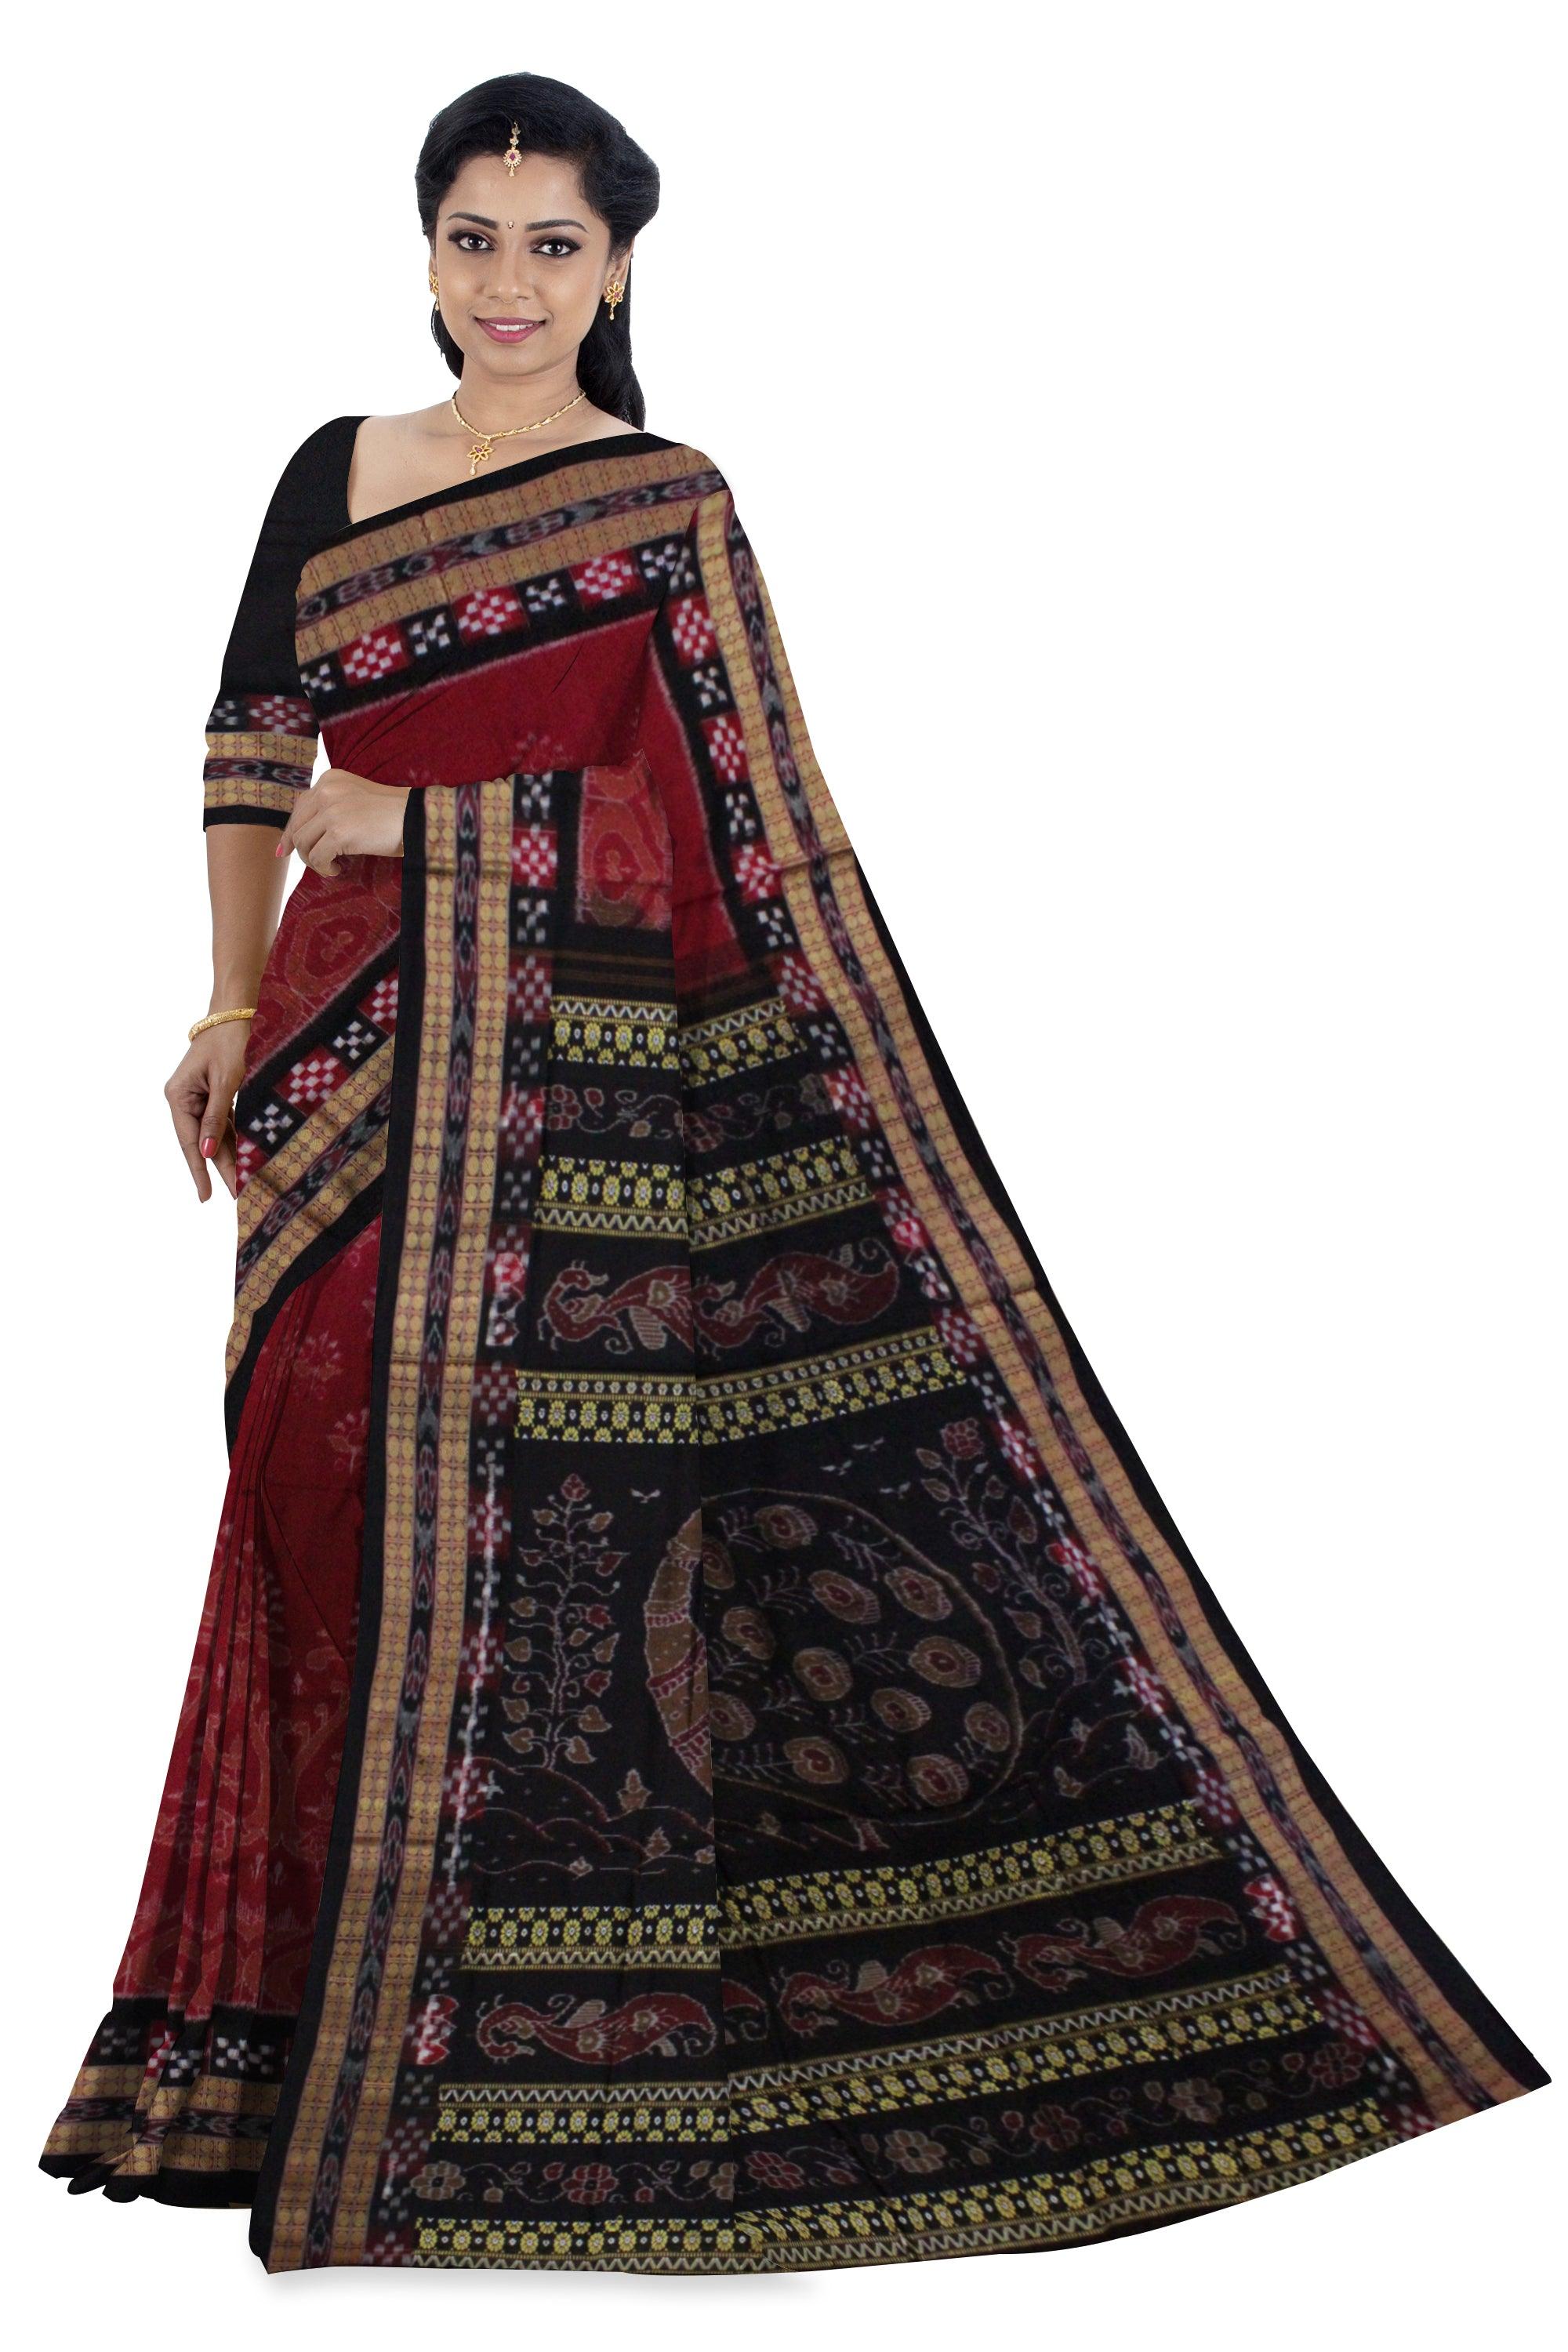 Pasapali design ,Peacock and Flower Pattern Sambaluri cotton saree in Maroon color - Koshali Arts & Crafts Enterprise